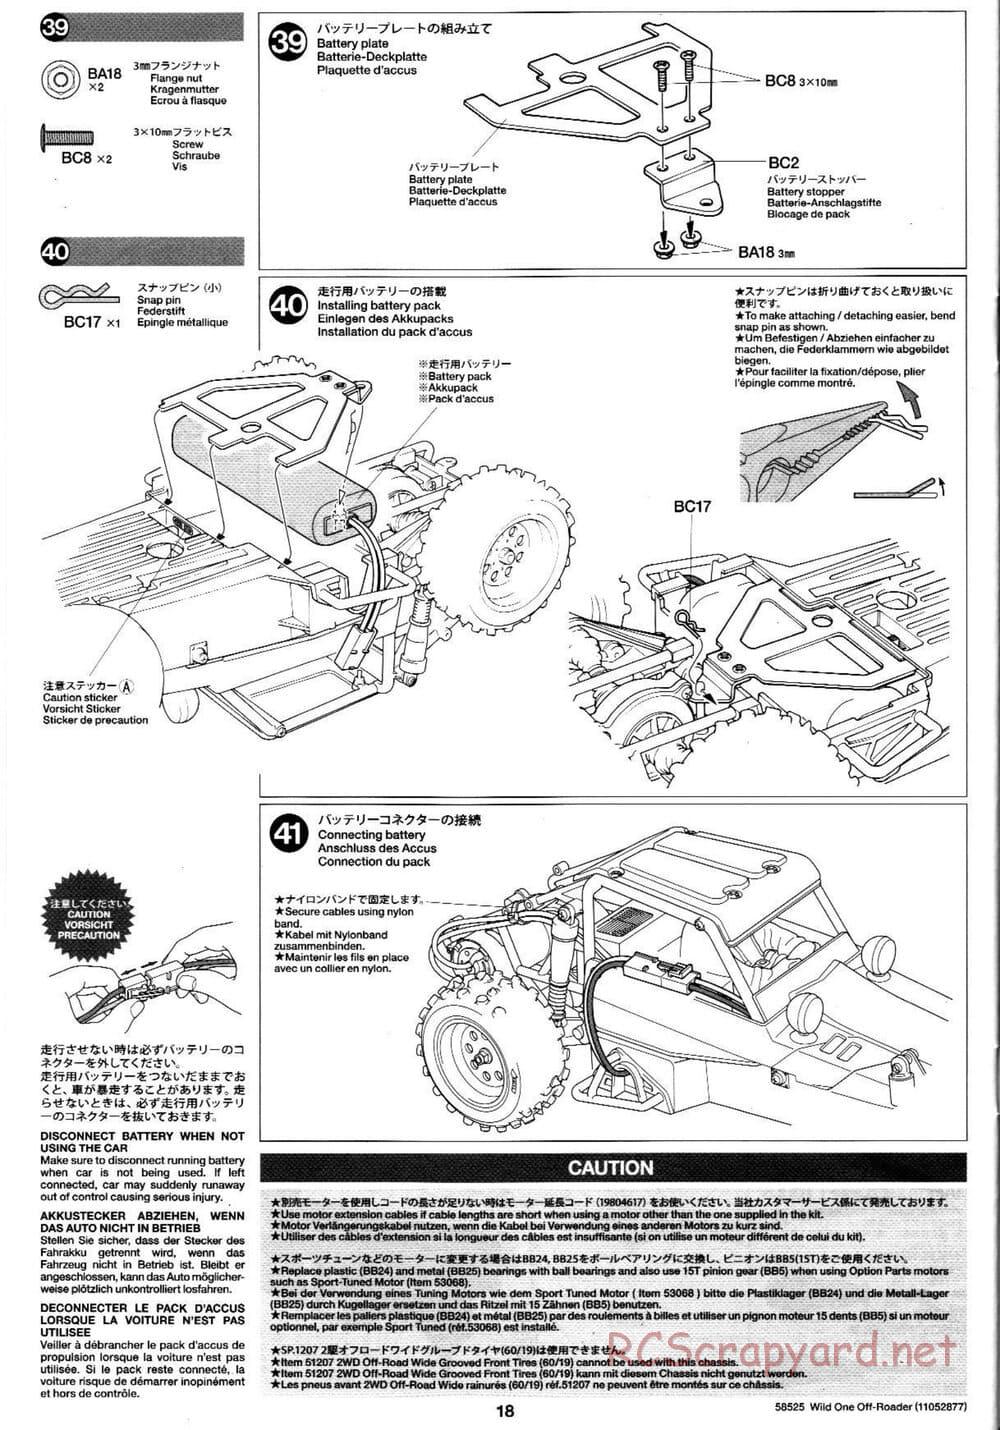 Tamiya - Wild One Off-Roader - FAV Chassis - Manual - Page 18